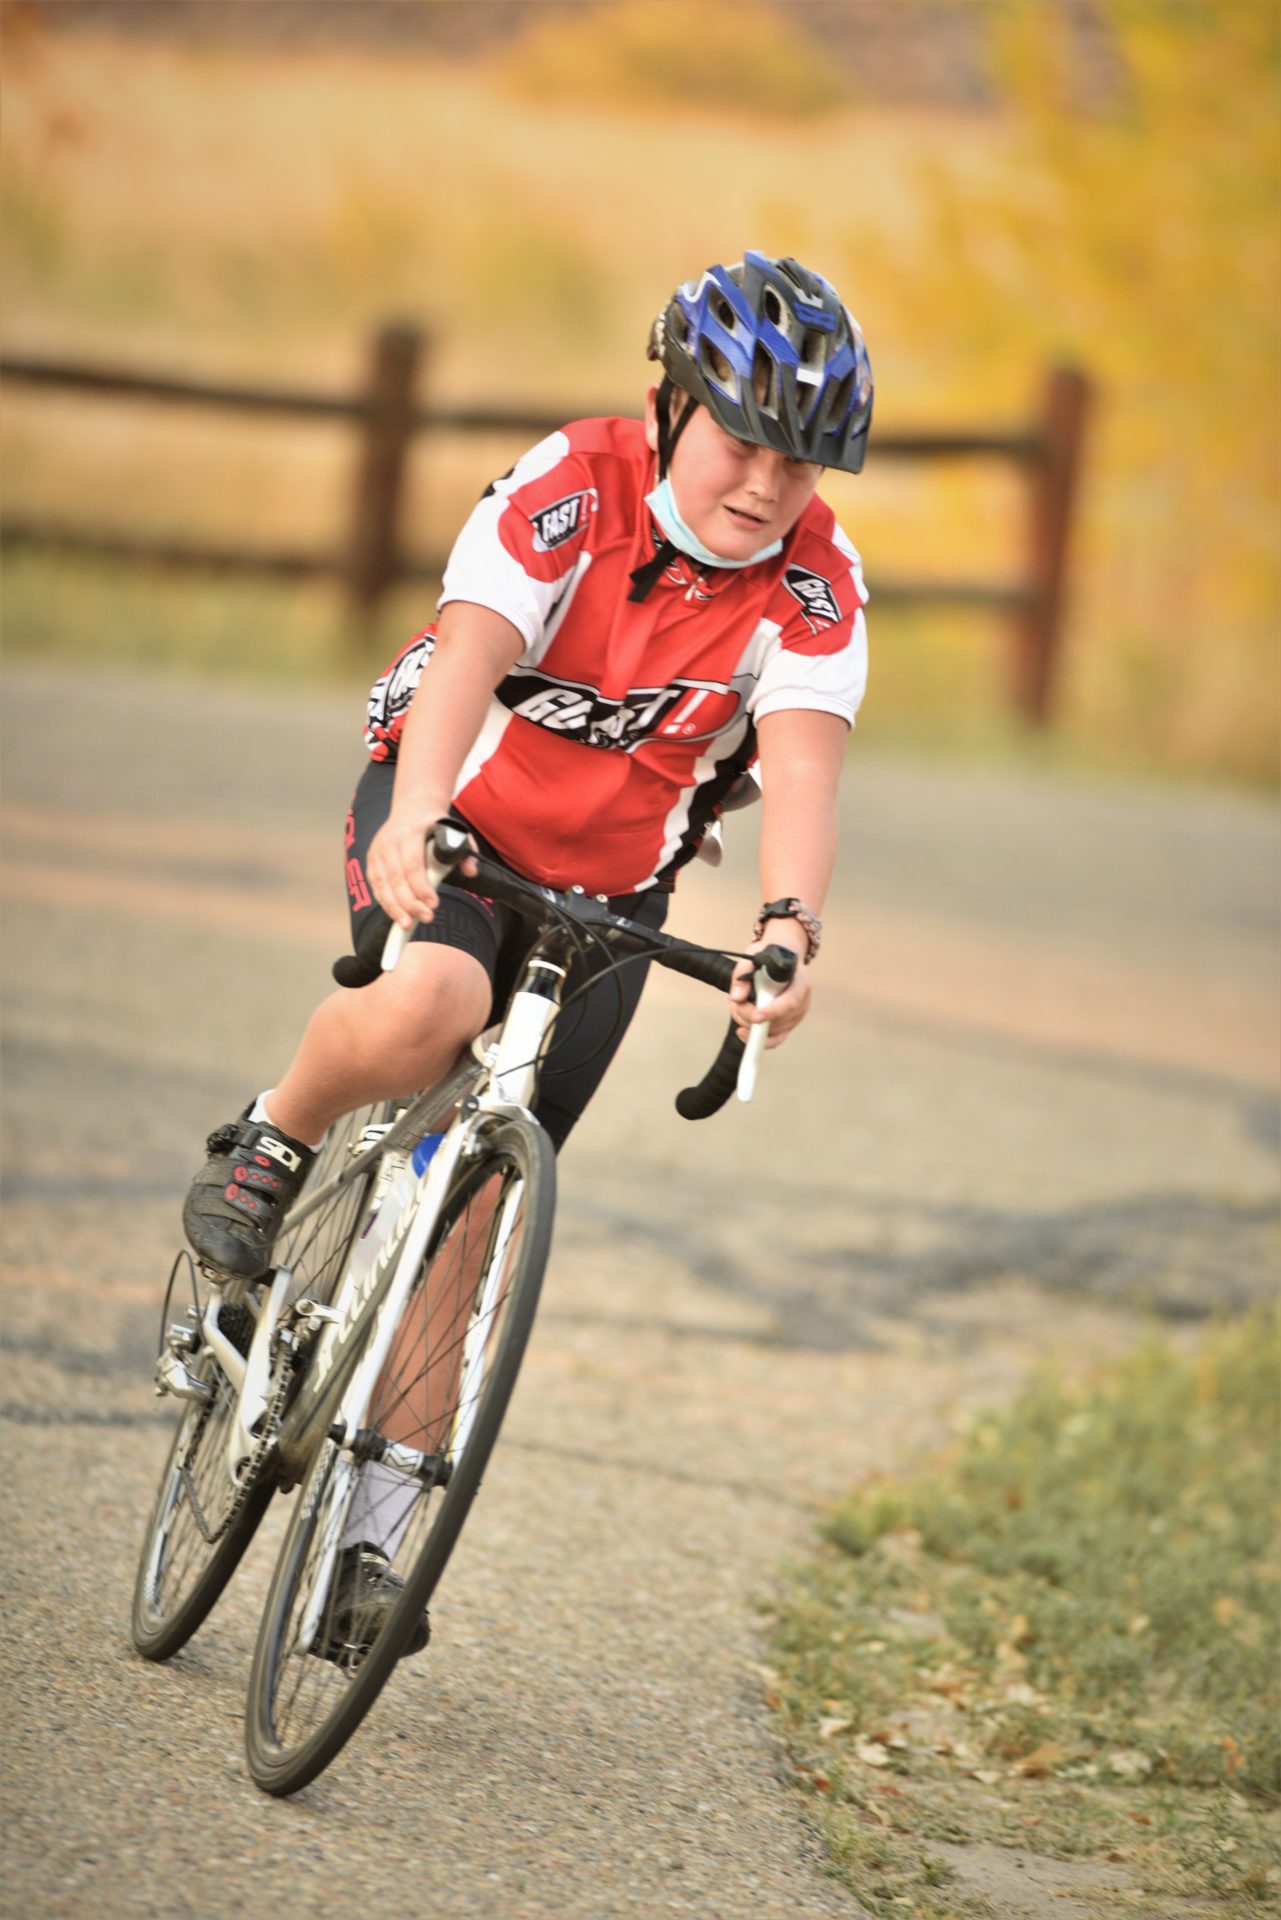 A child rides a road bike toward the camera.